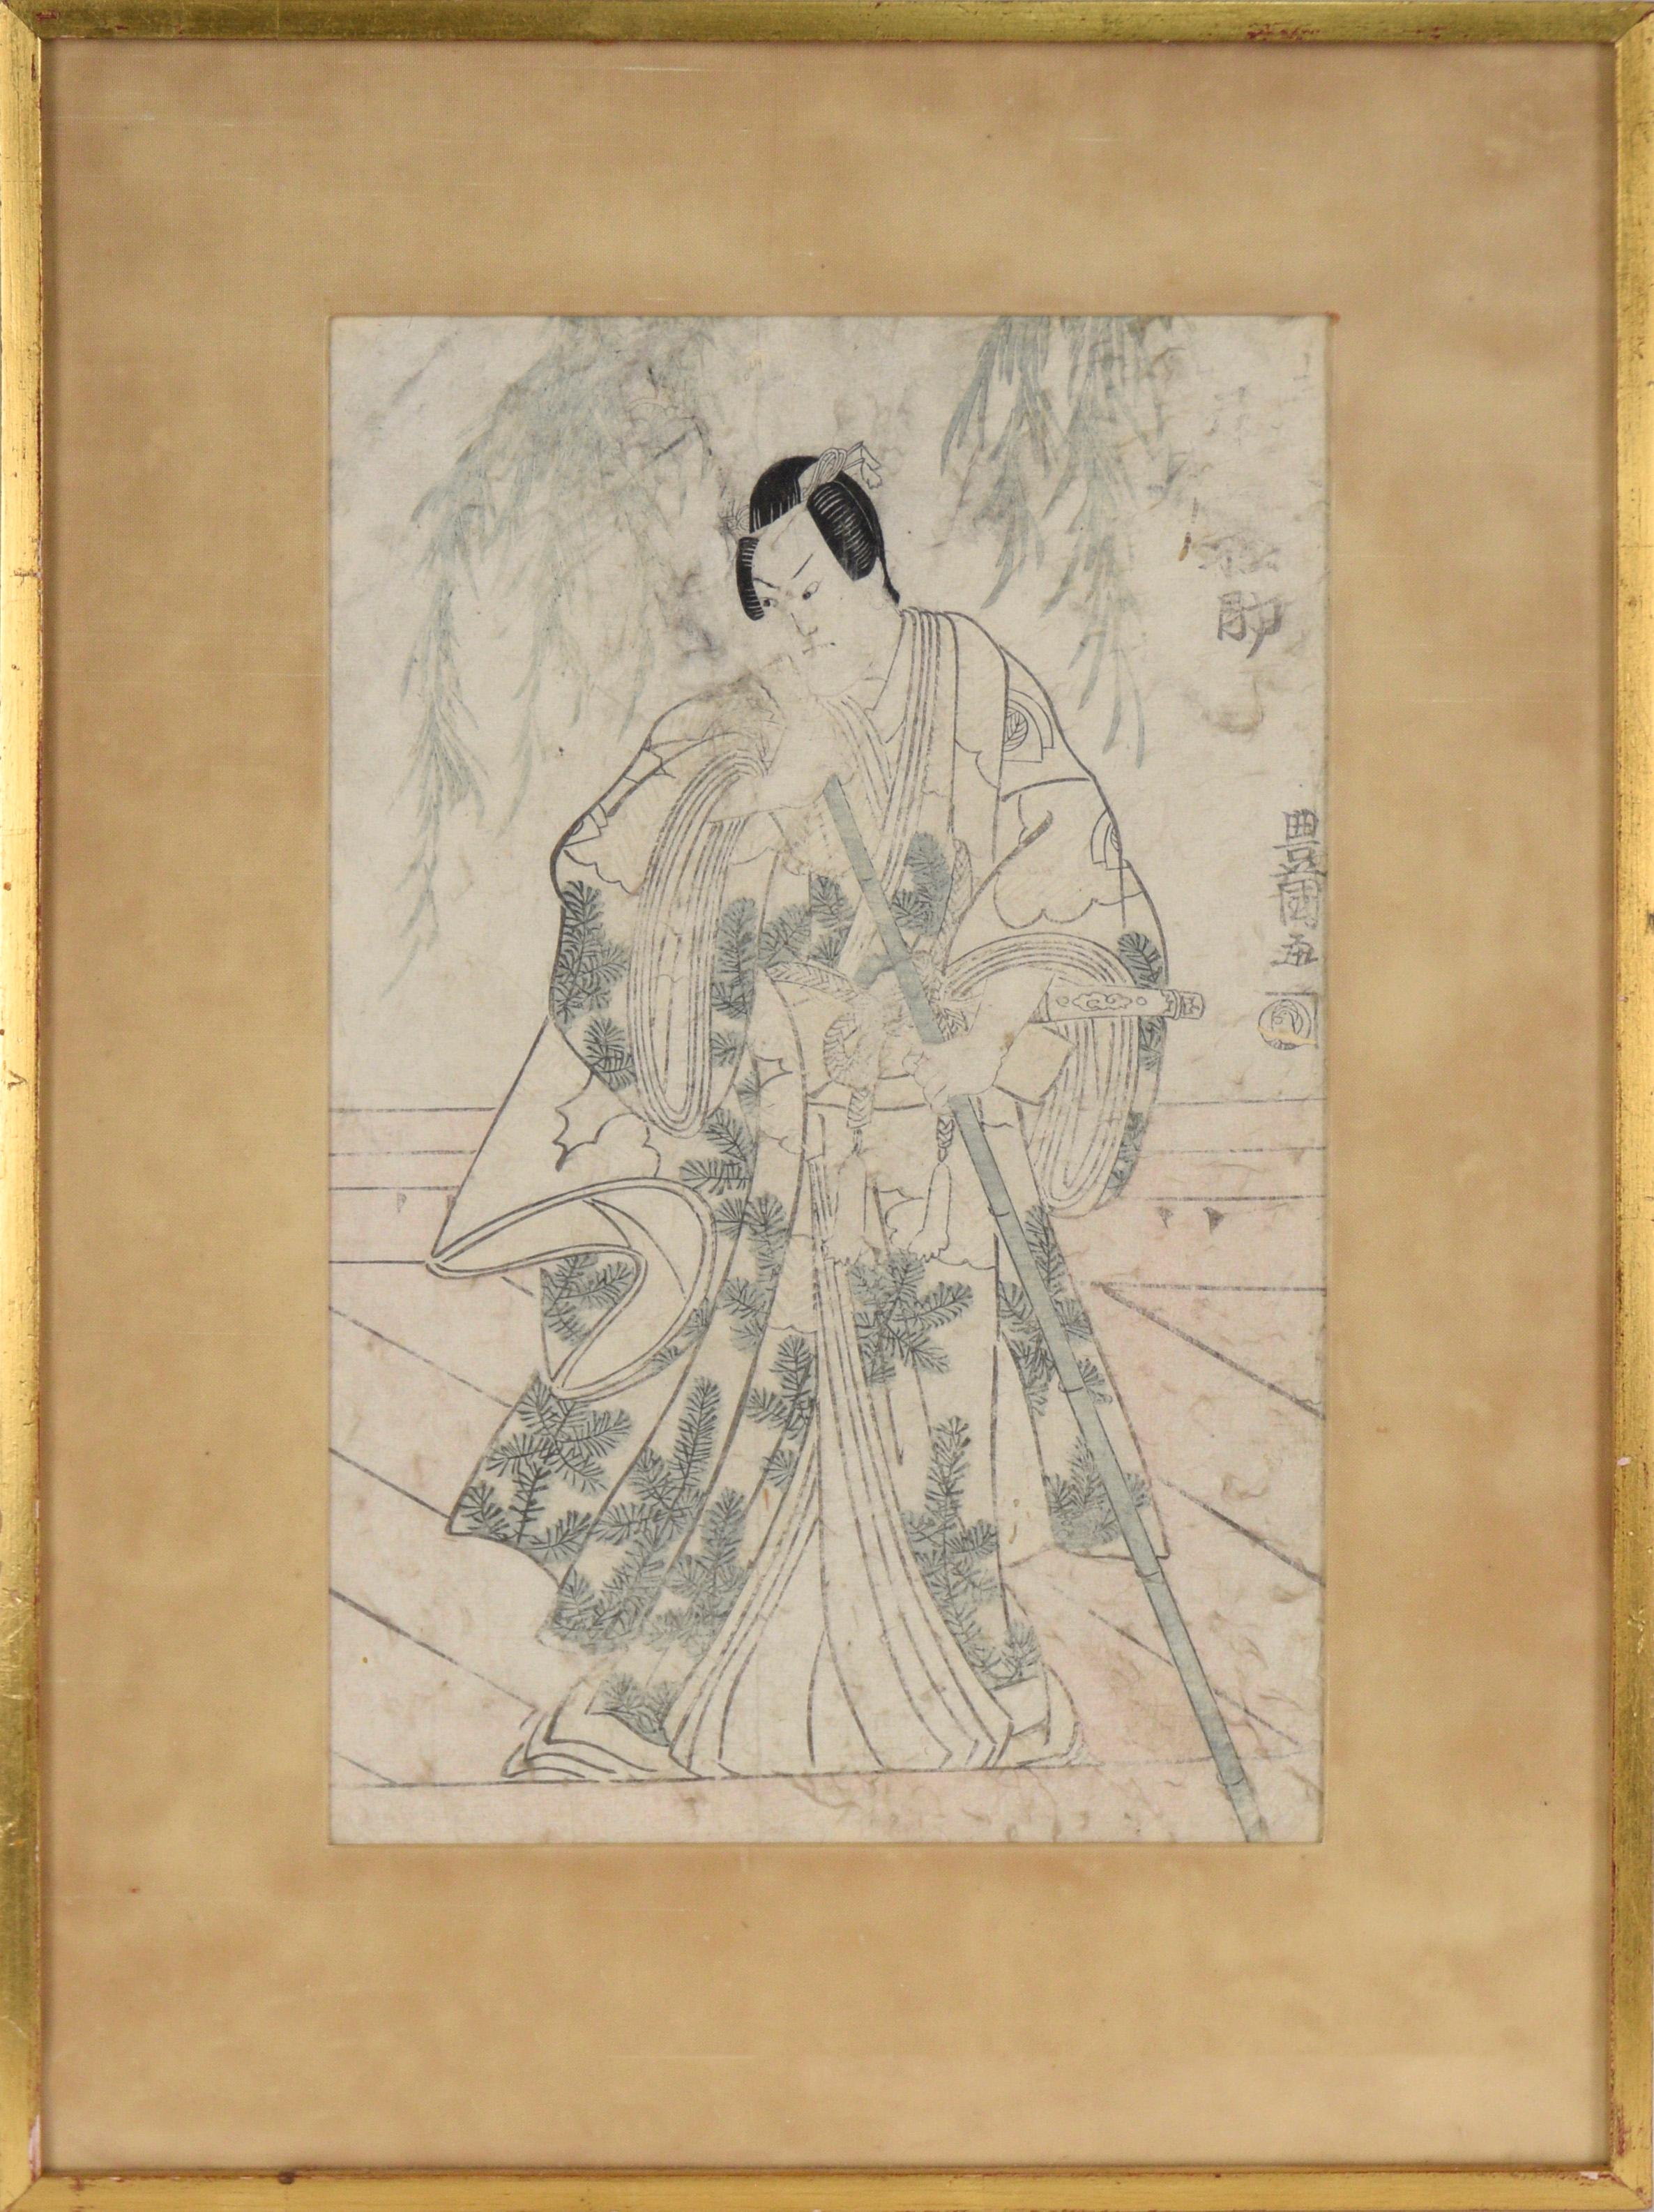 Utagawa Toyokuni Figurative Print - Kabuki Actor with Pine-Patterned Robe - Japanese Woodblock Print